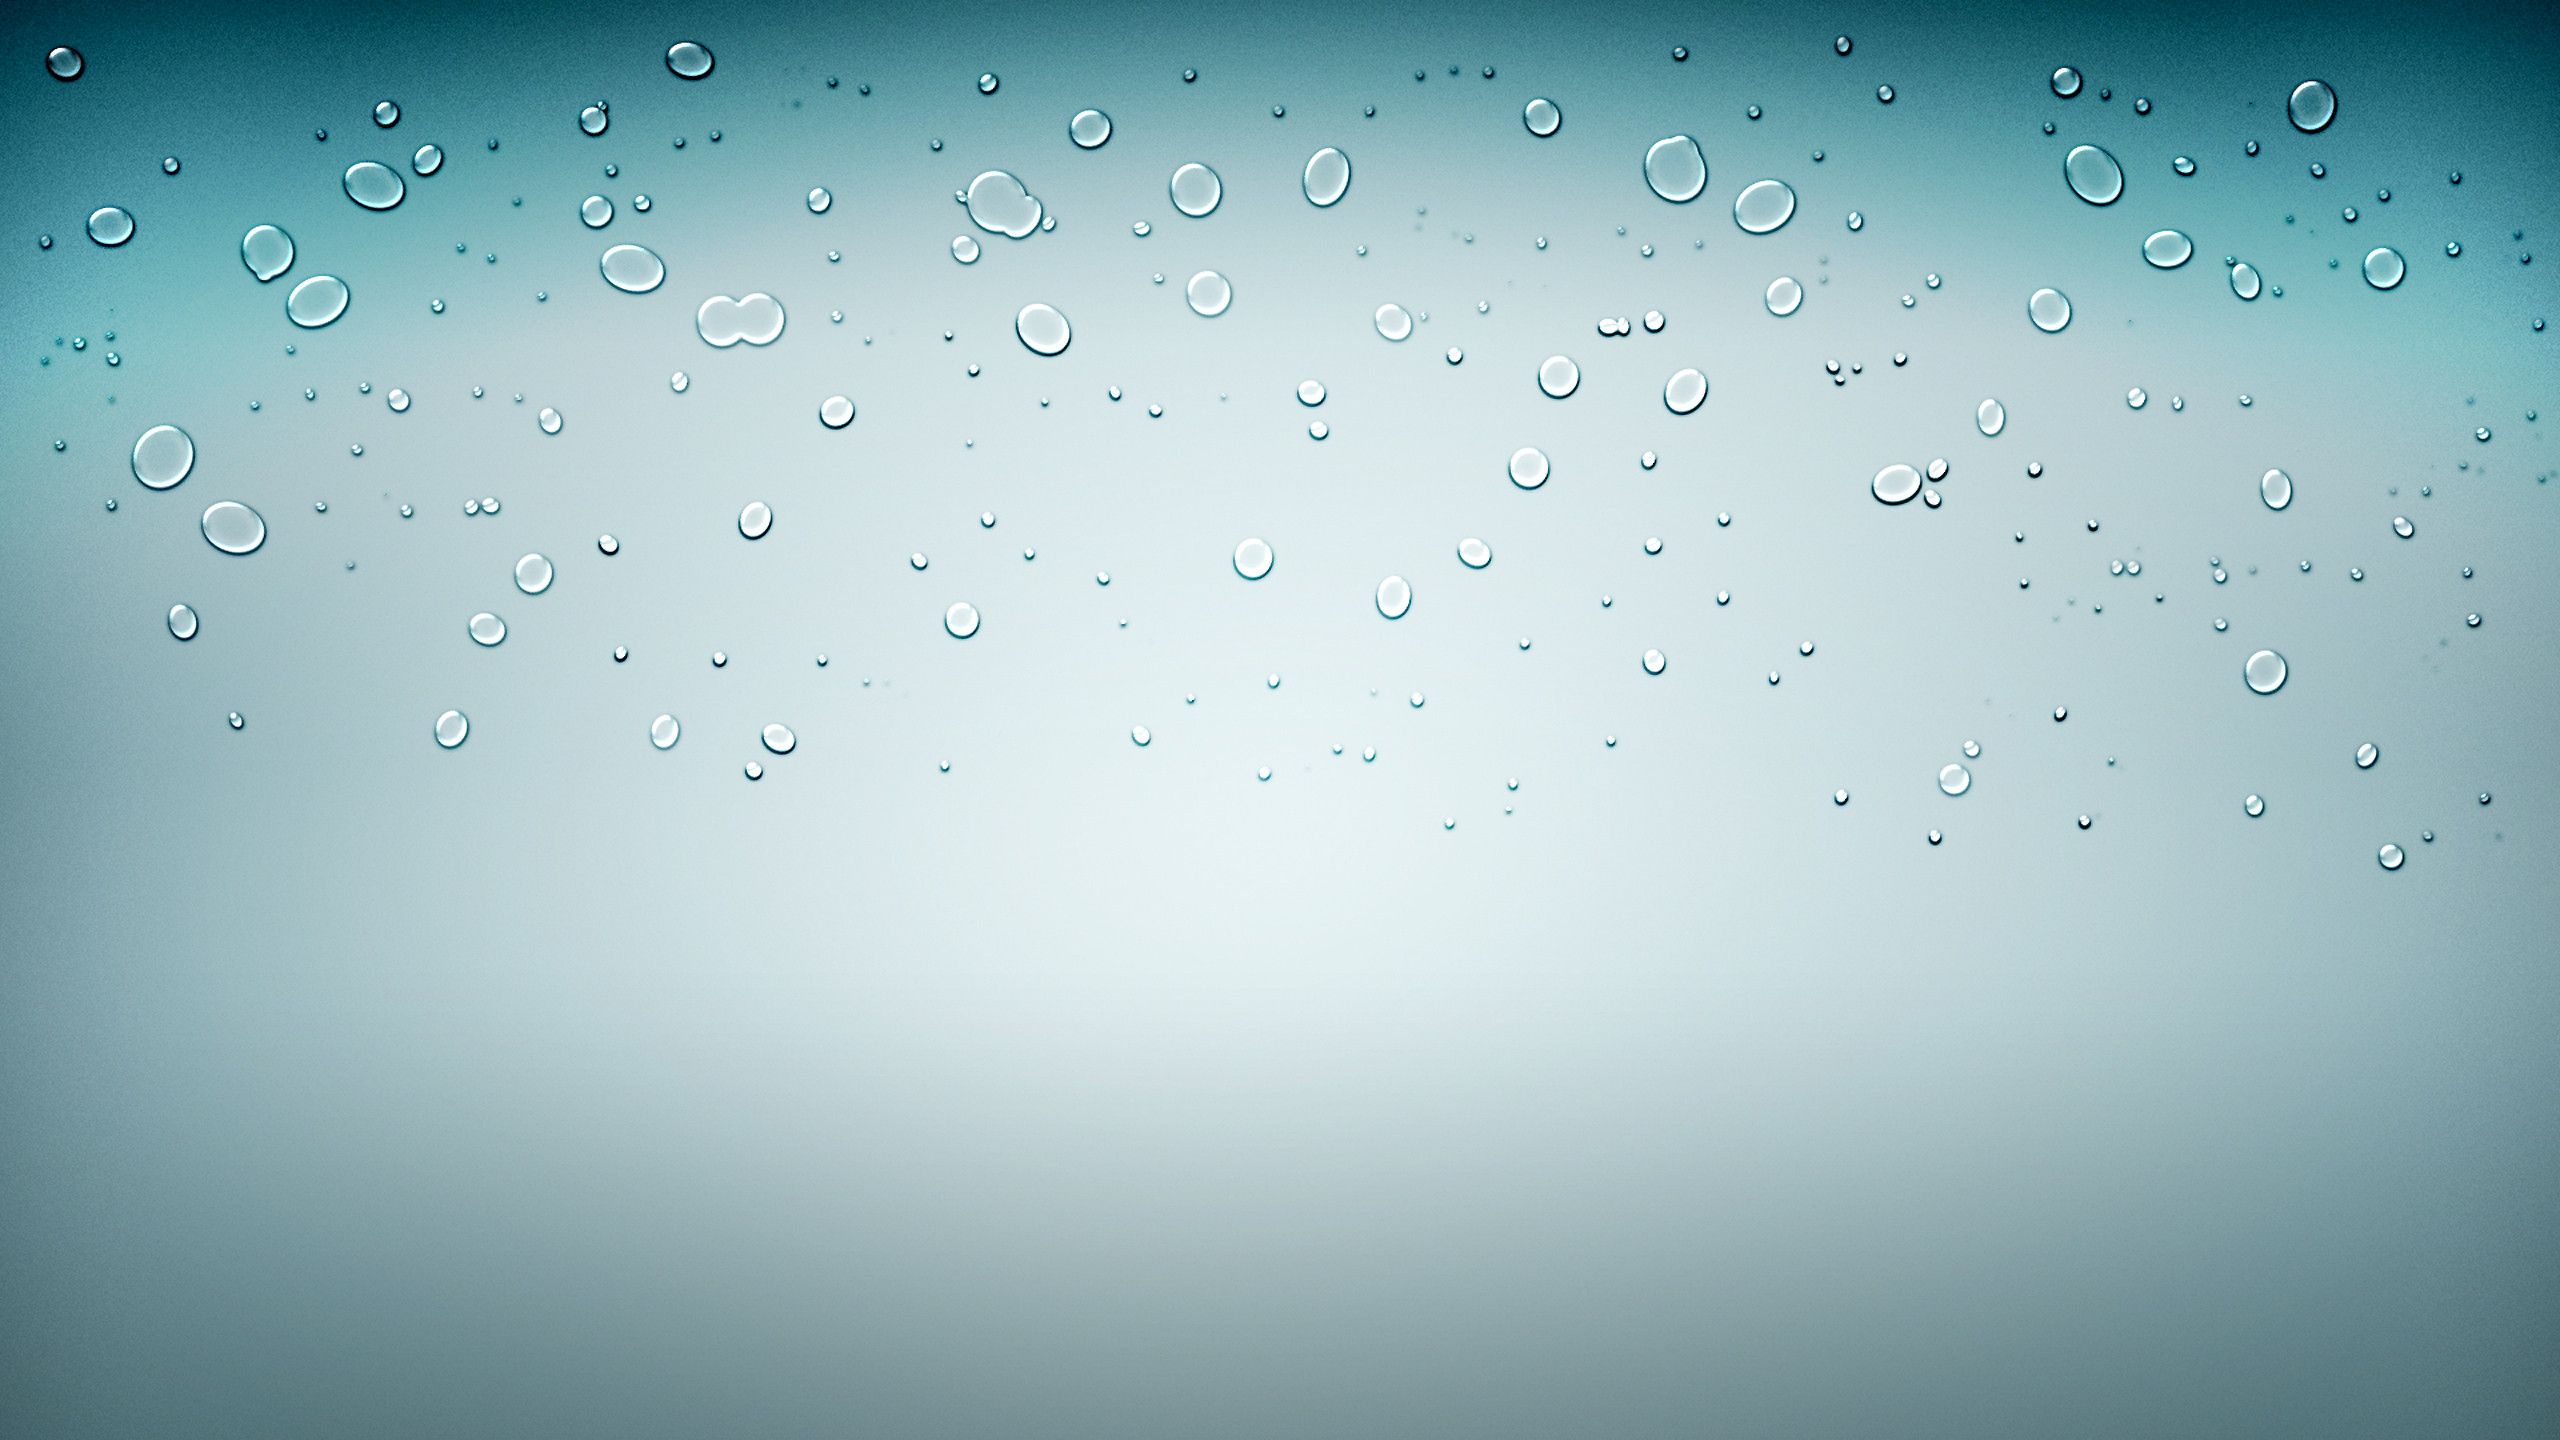 iOS Water Drops Wallpaper for the Desktop